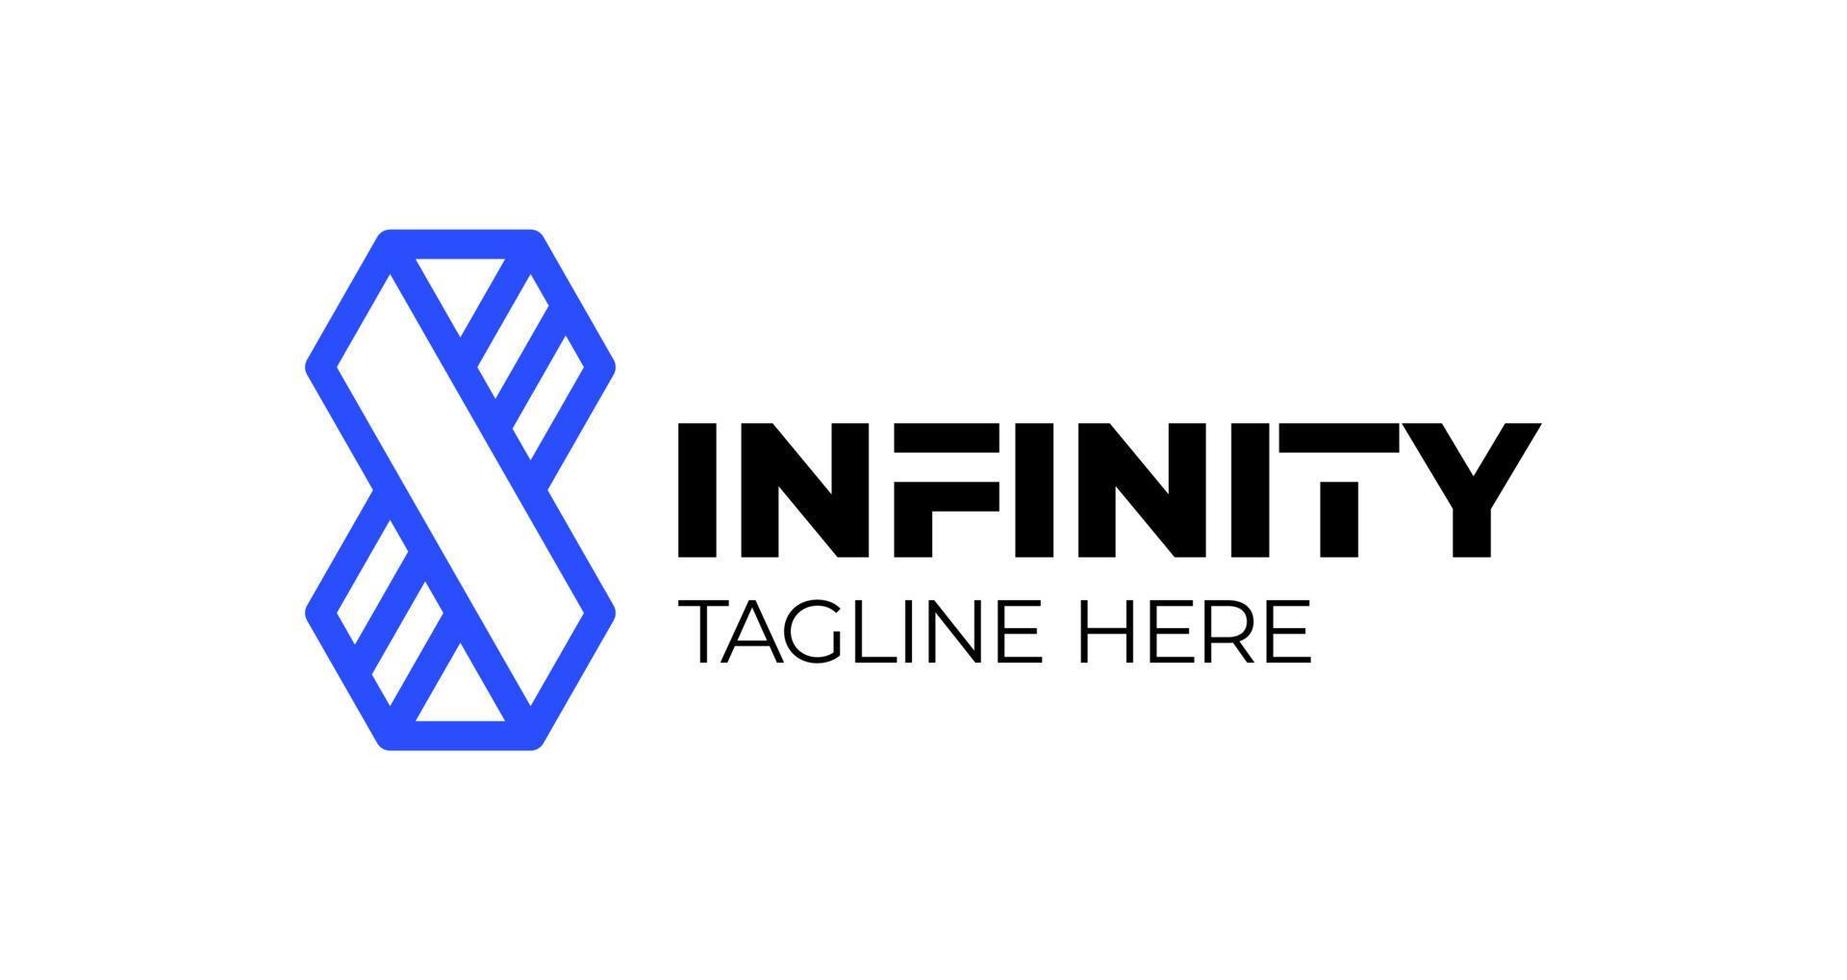 Infinity Hexagonal Logo. Geometric Infinity Cube Hexagon logo flat concept double hex logotype template vector